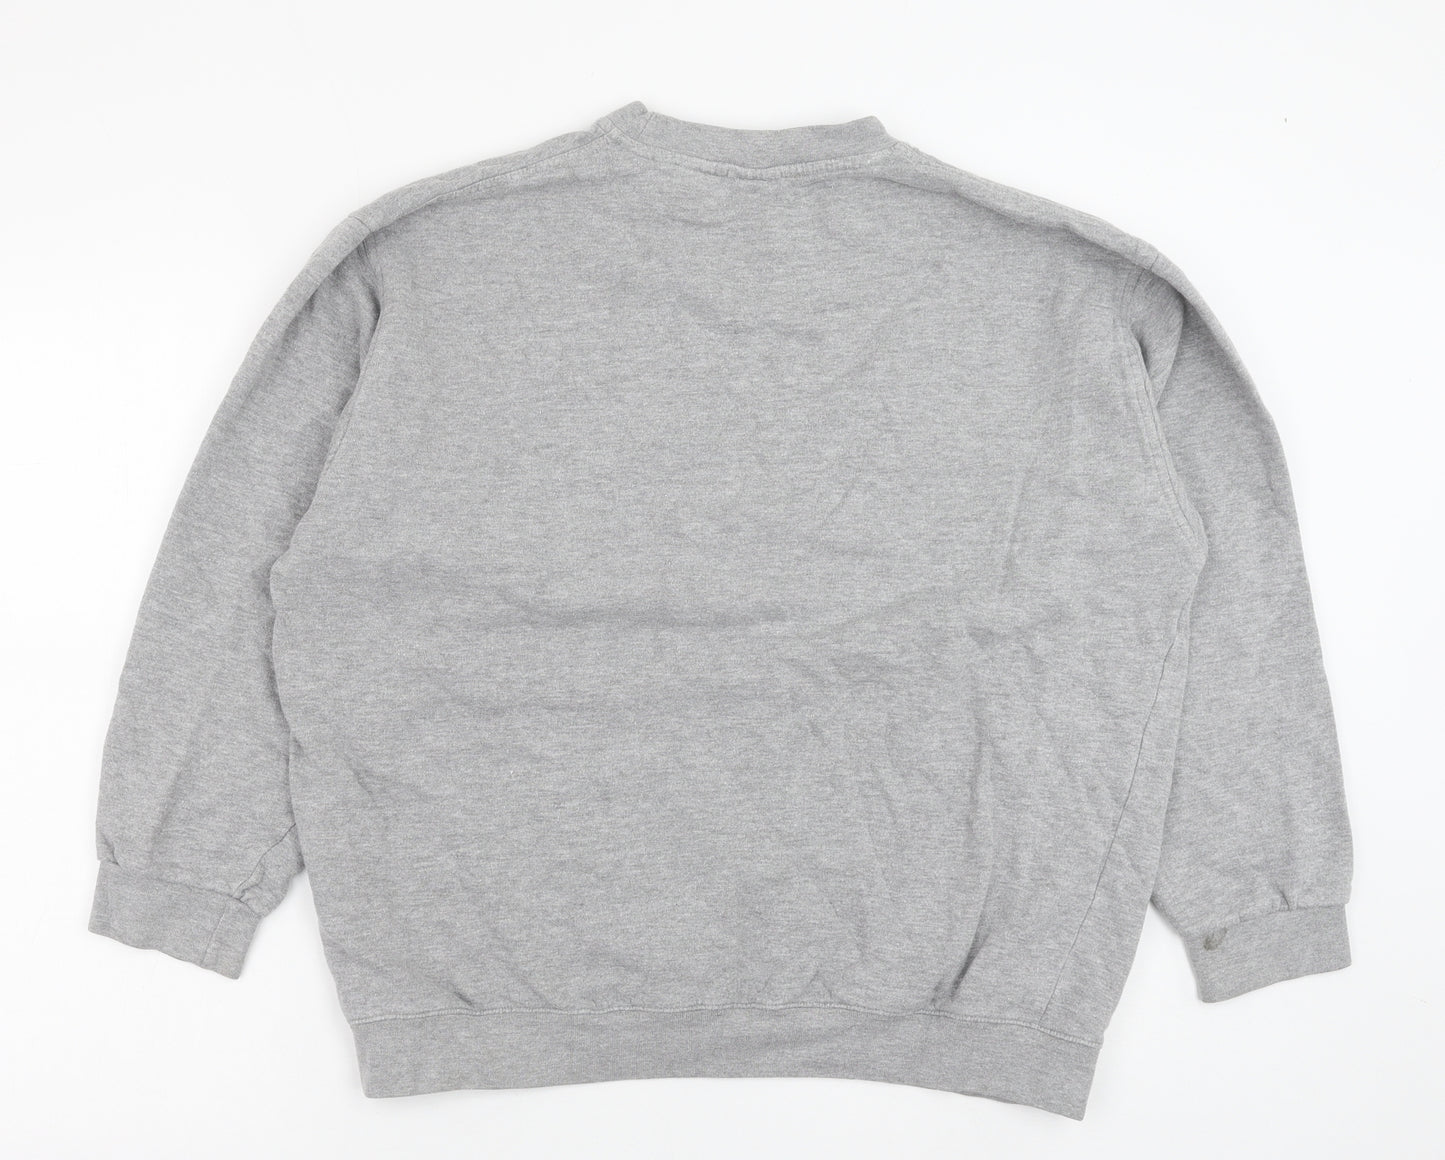 Texas Bull Mens Grey Cotton Pullover Sweatshirt Size XL